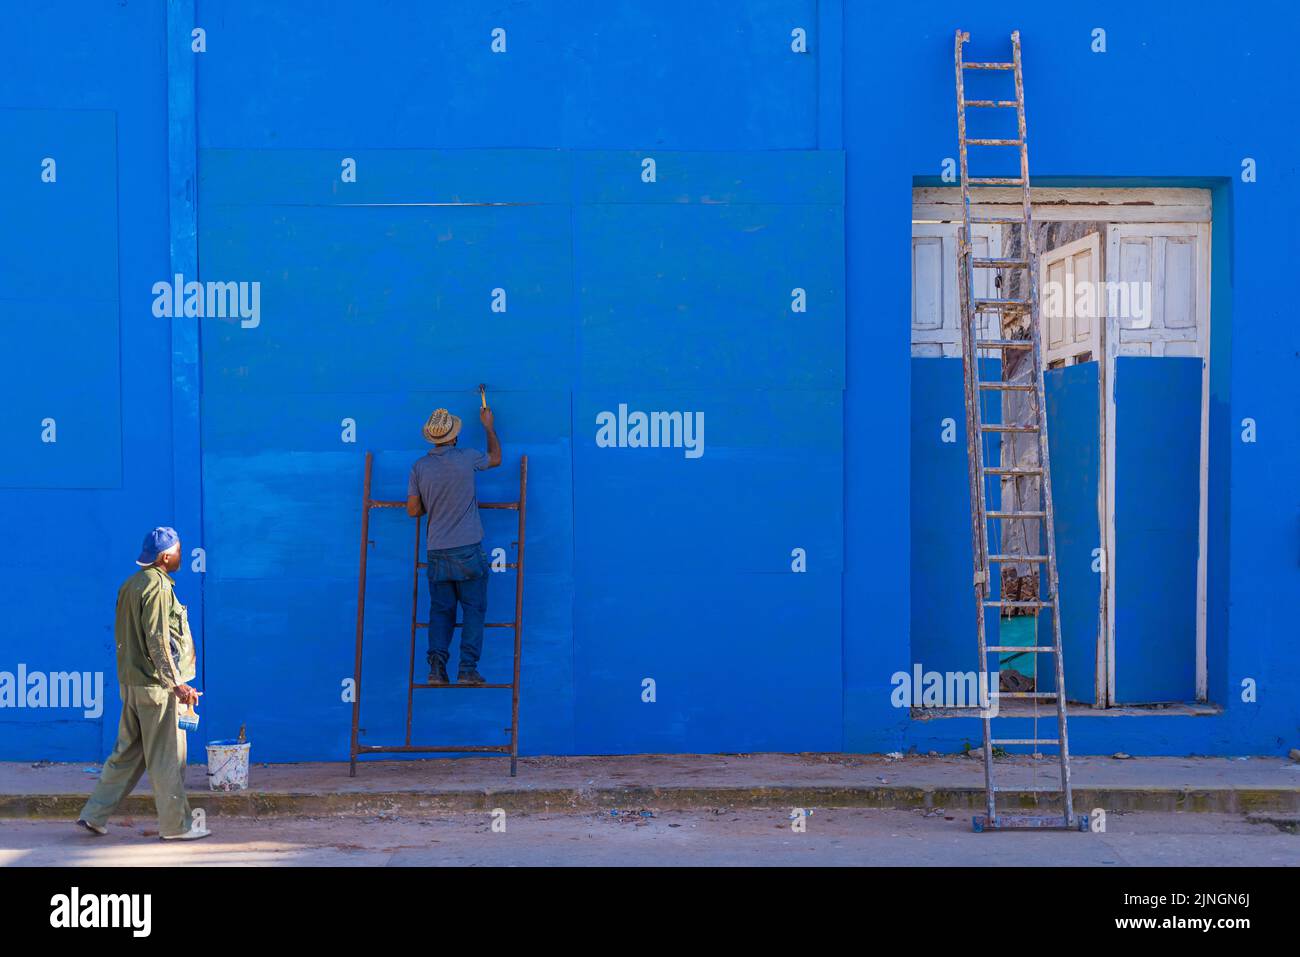 TRINIDAD, KUBA - 7. JANUAR: Kubaner malen am 7. Januar 2021 in Trinidad eine blaue Mauer. Stockfoto